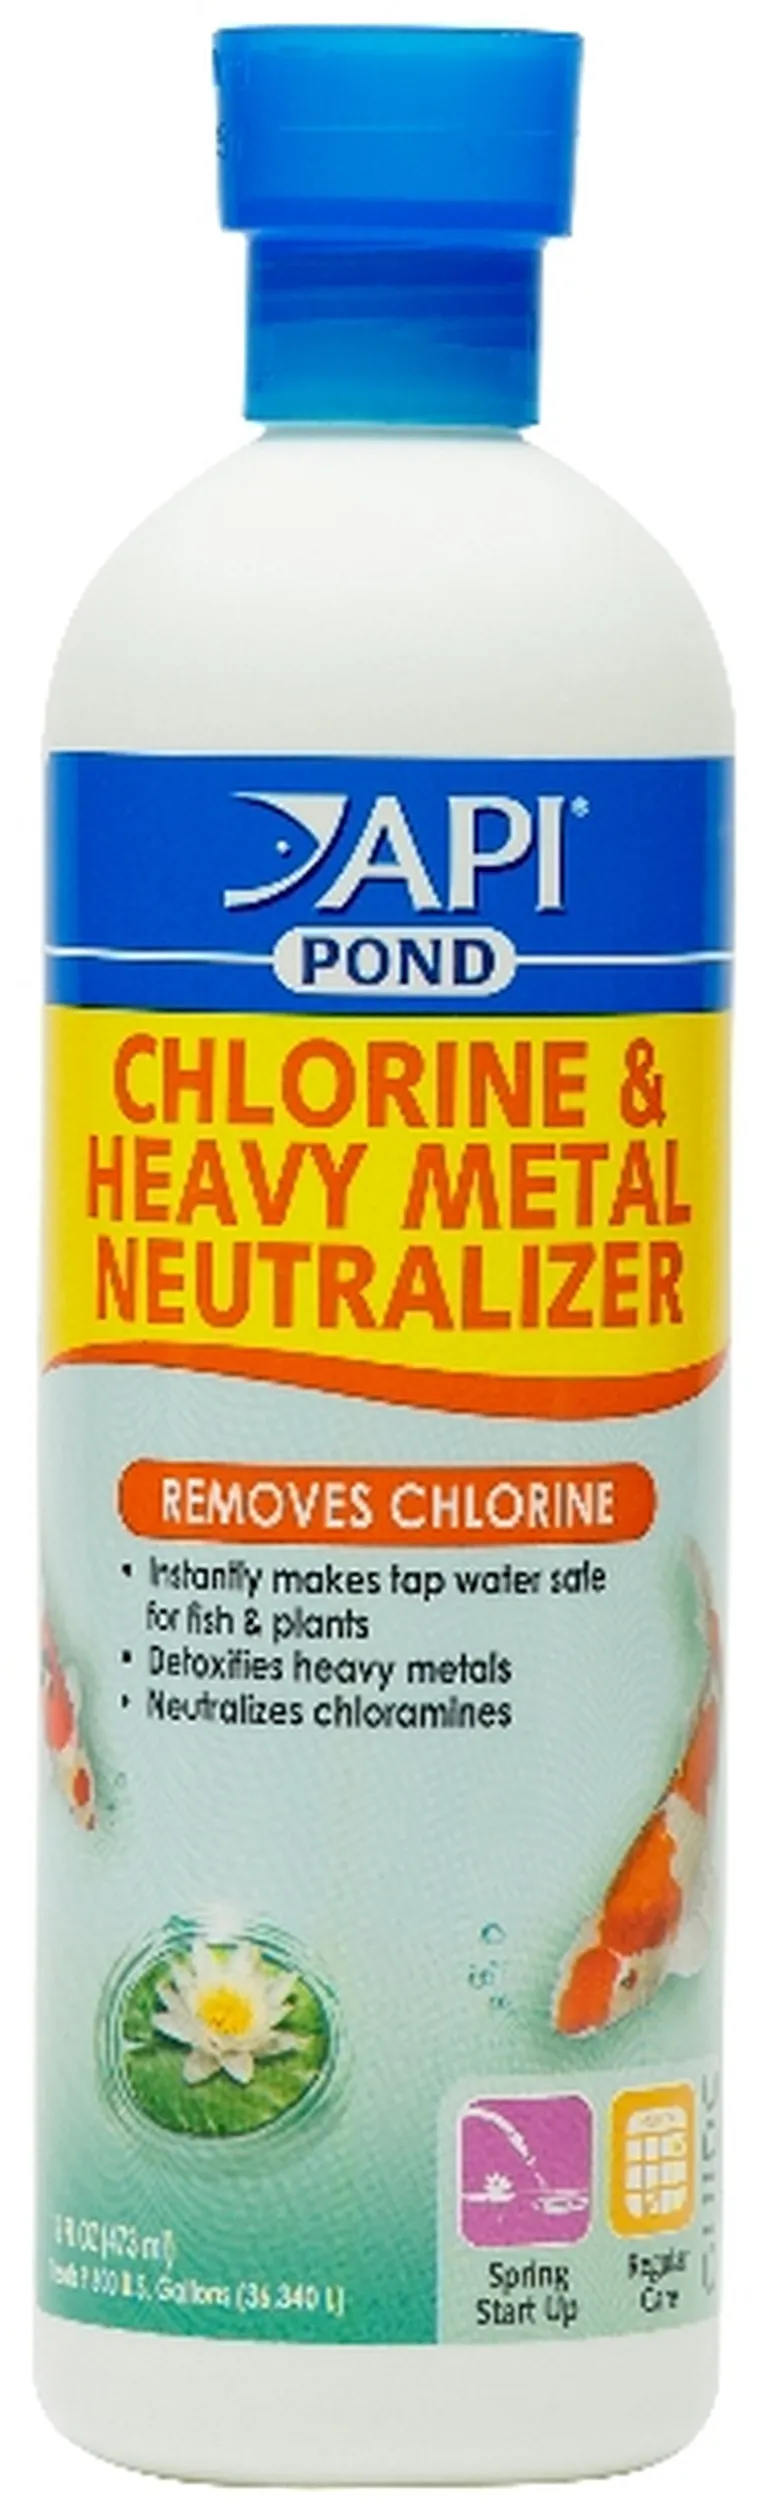 API Pond Chlorine and Heavy Metal Neutralizer Removes Chlorine Photo 1